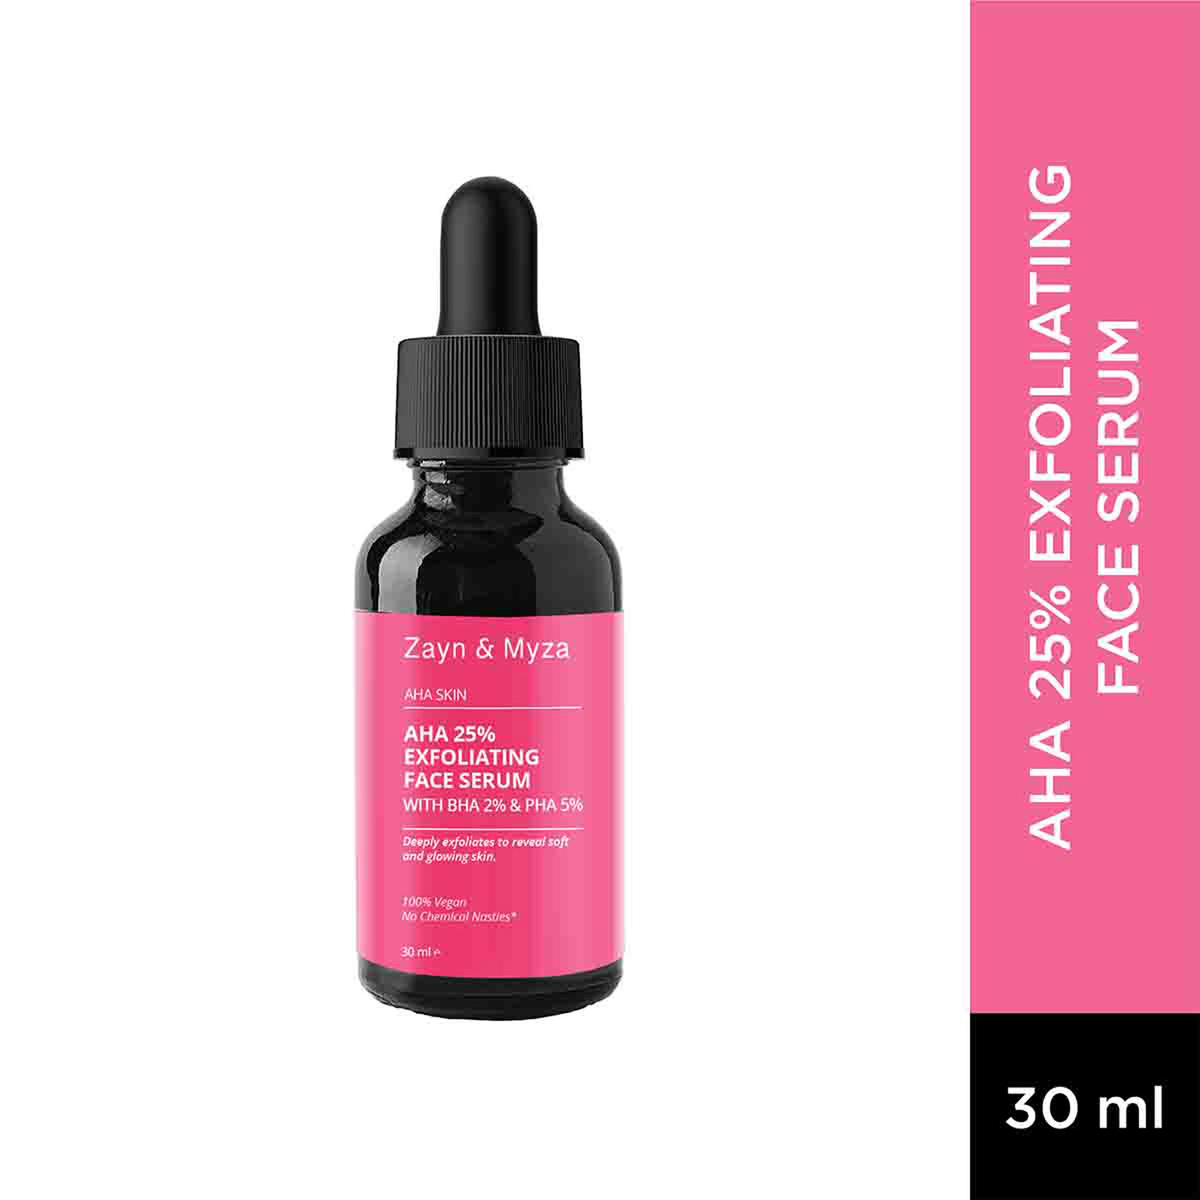 Zayn & Myza Serum Exfoliating Face Serum Deeply Exfoliates to Reveal Soft and Glowing Skin, 30 ml